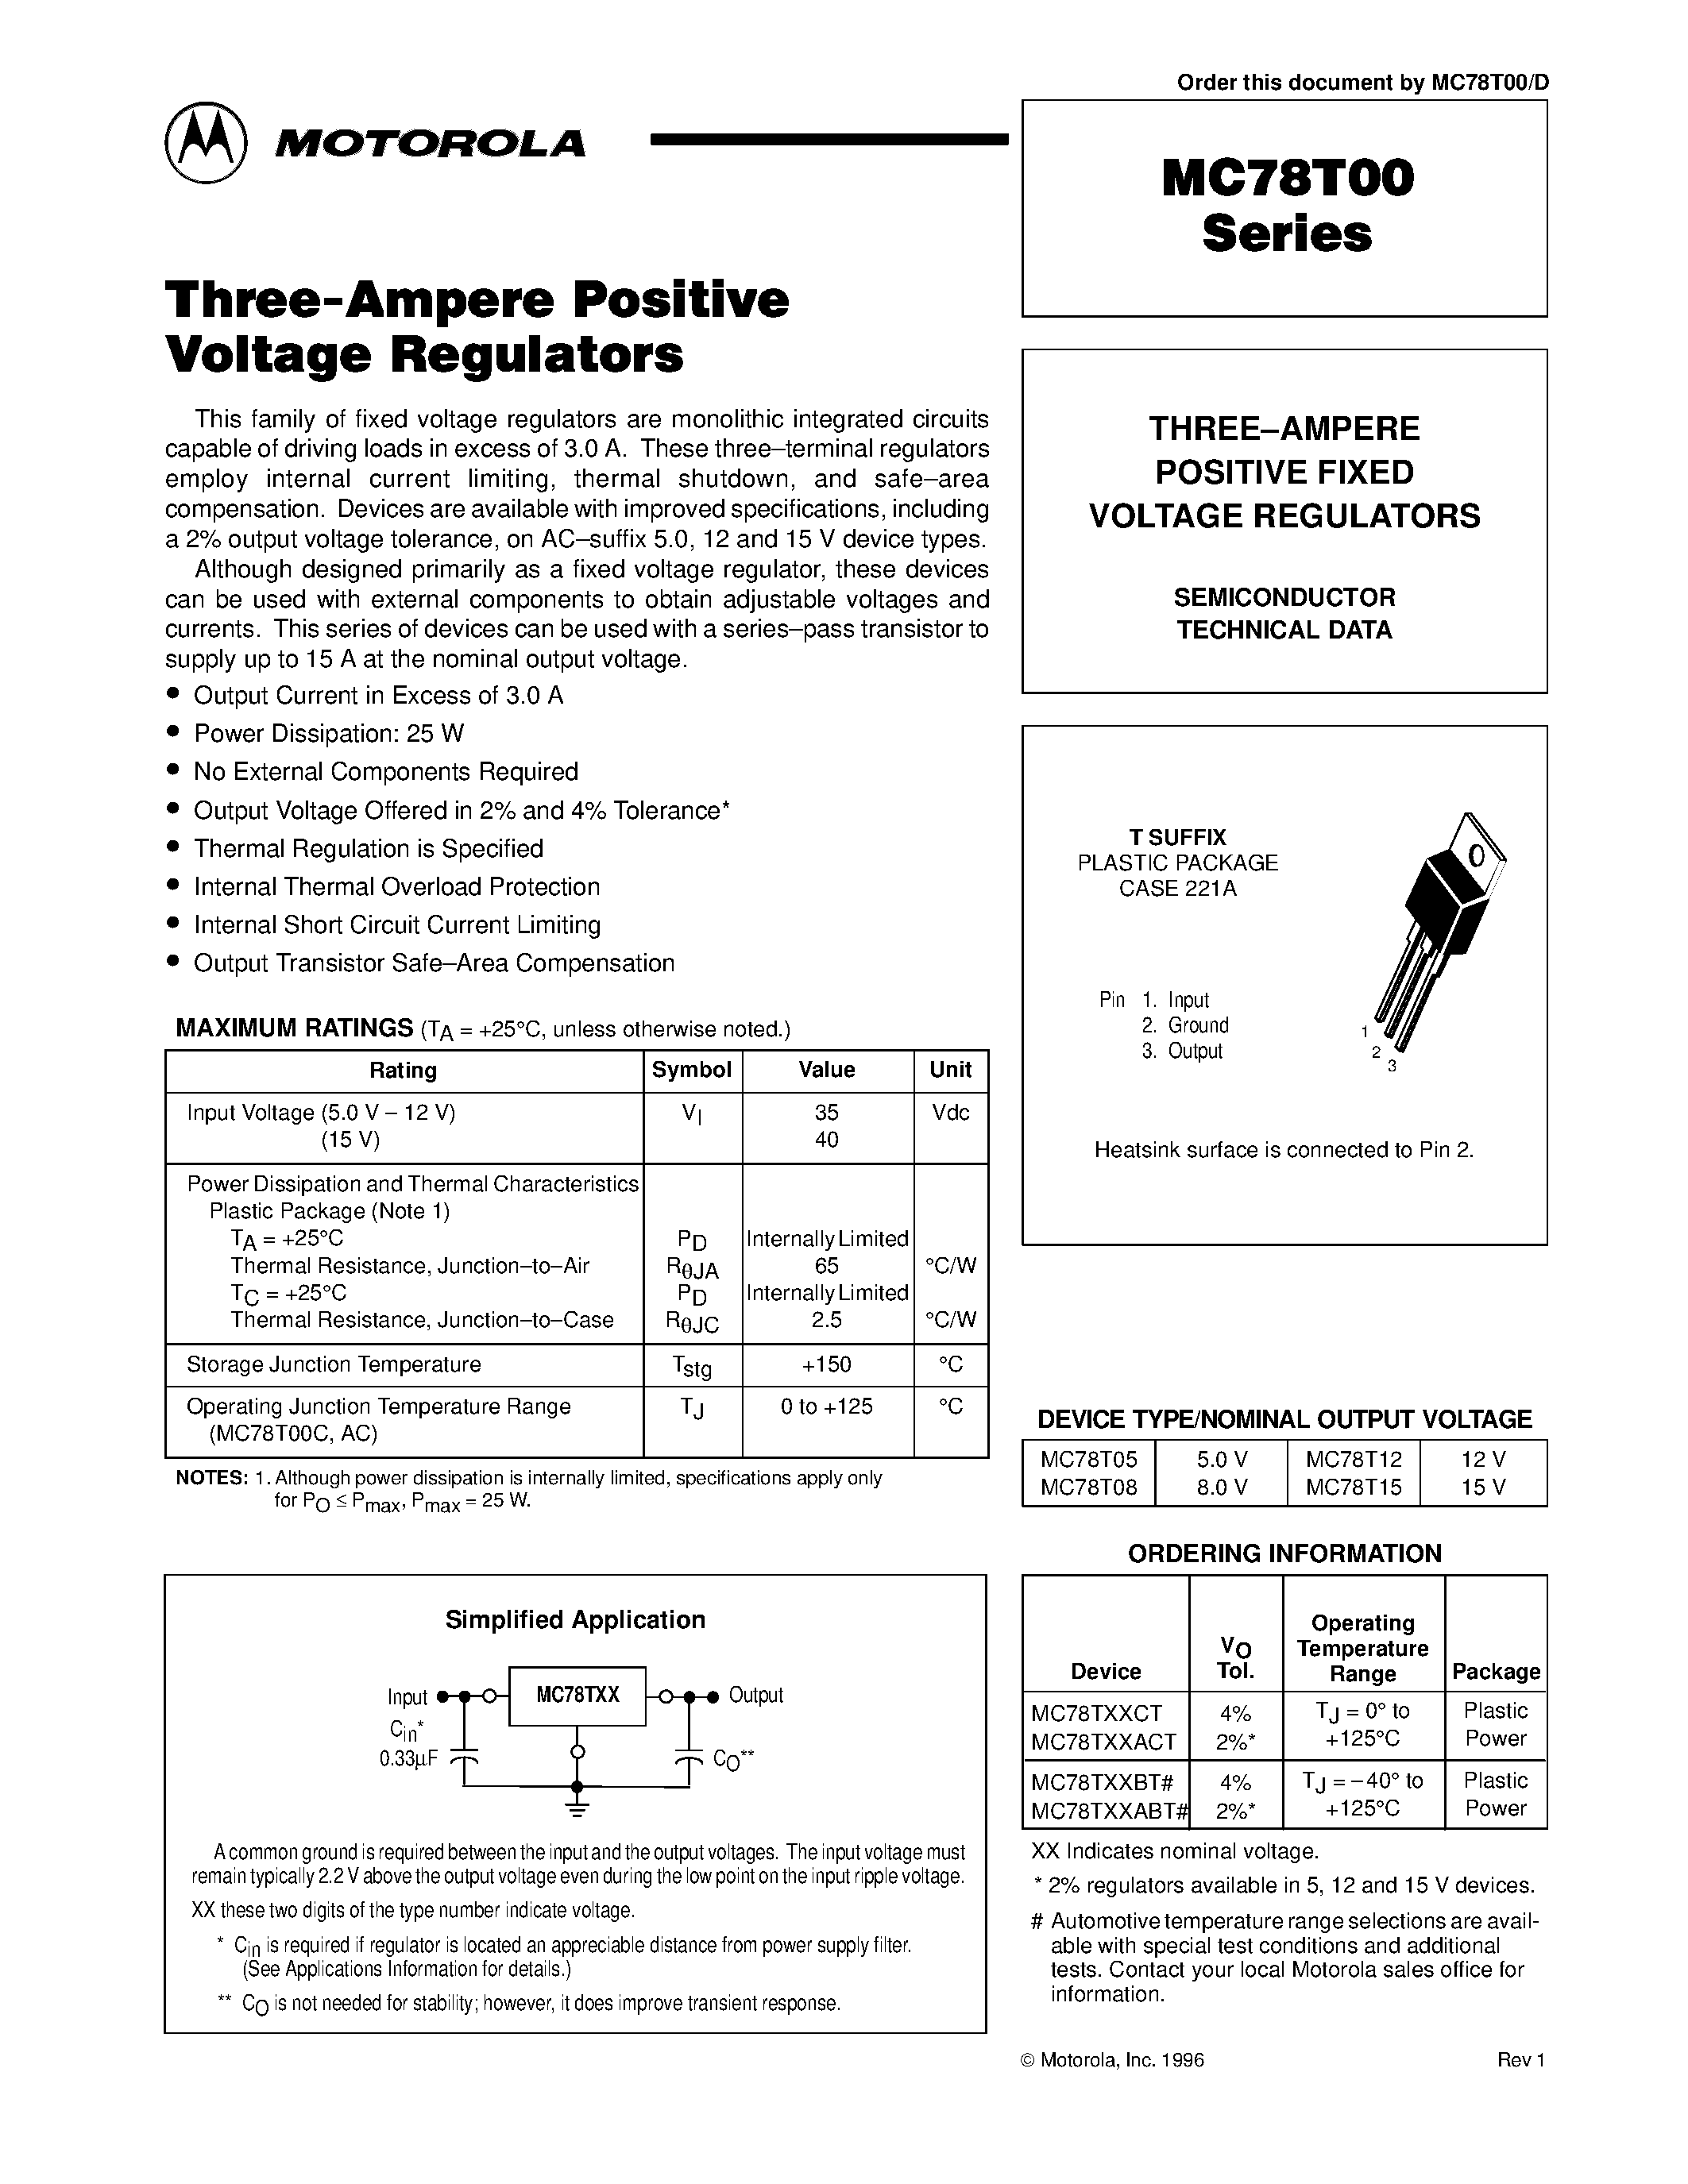 Datasheet MC78T15BT - THREE-AMPERE POSITIVE FIXED VOLTAGE REGULATORS page 1